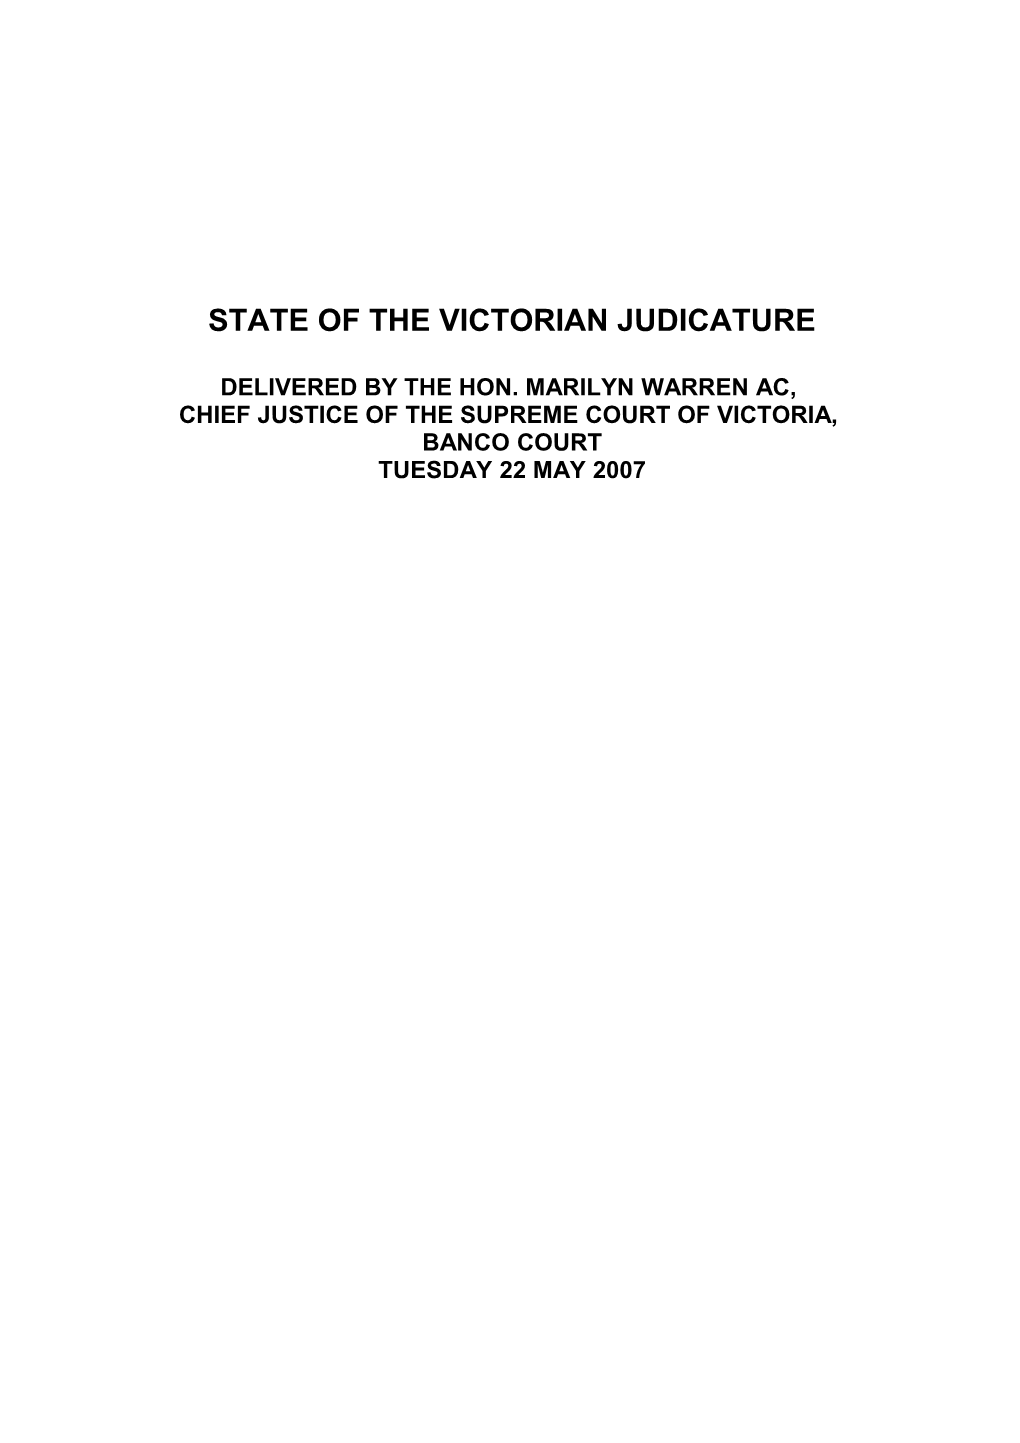 Inaugural State of Judicature Address